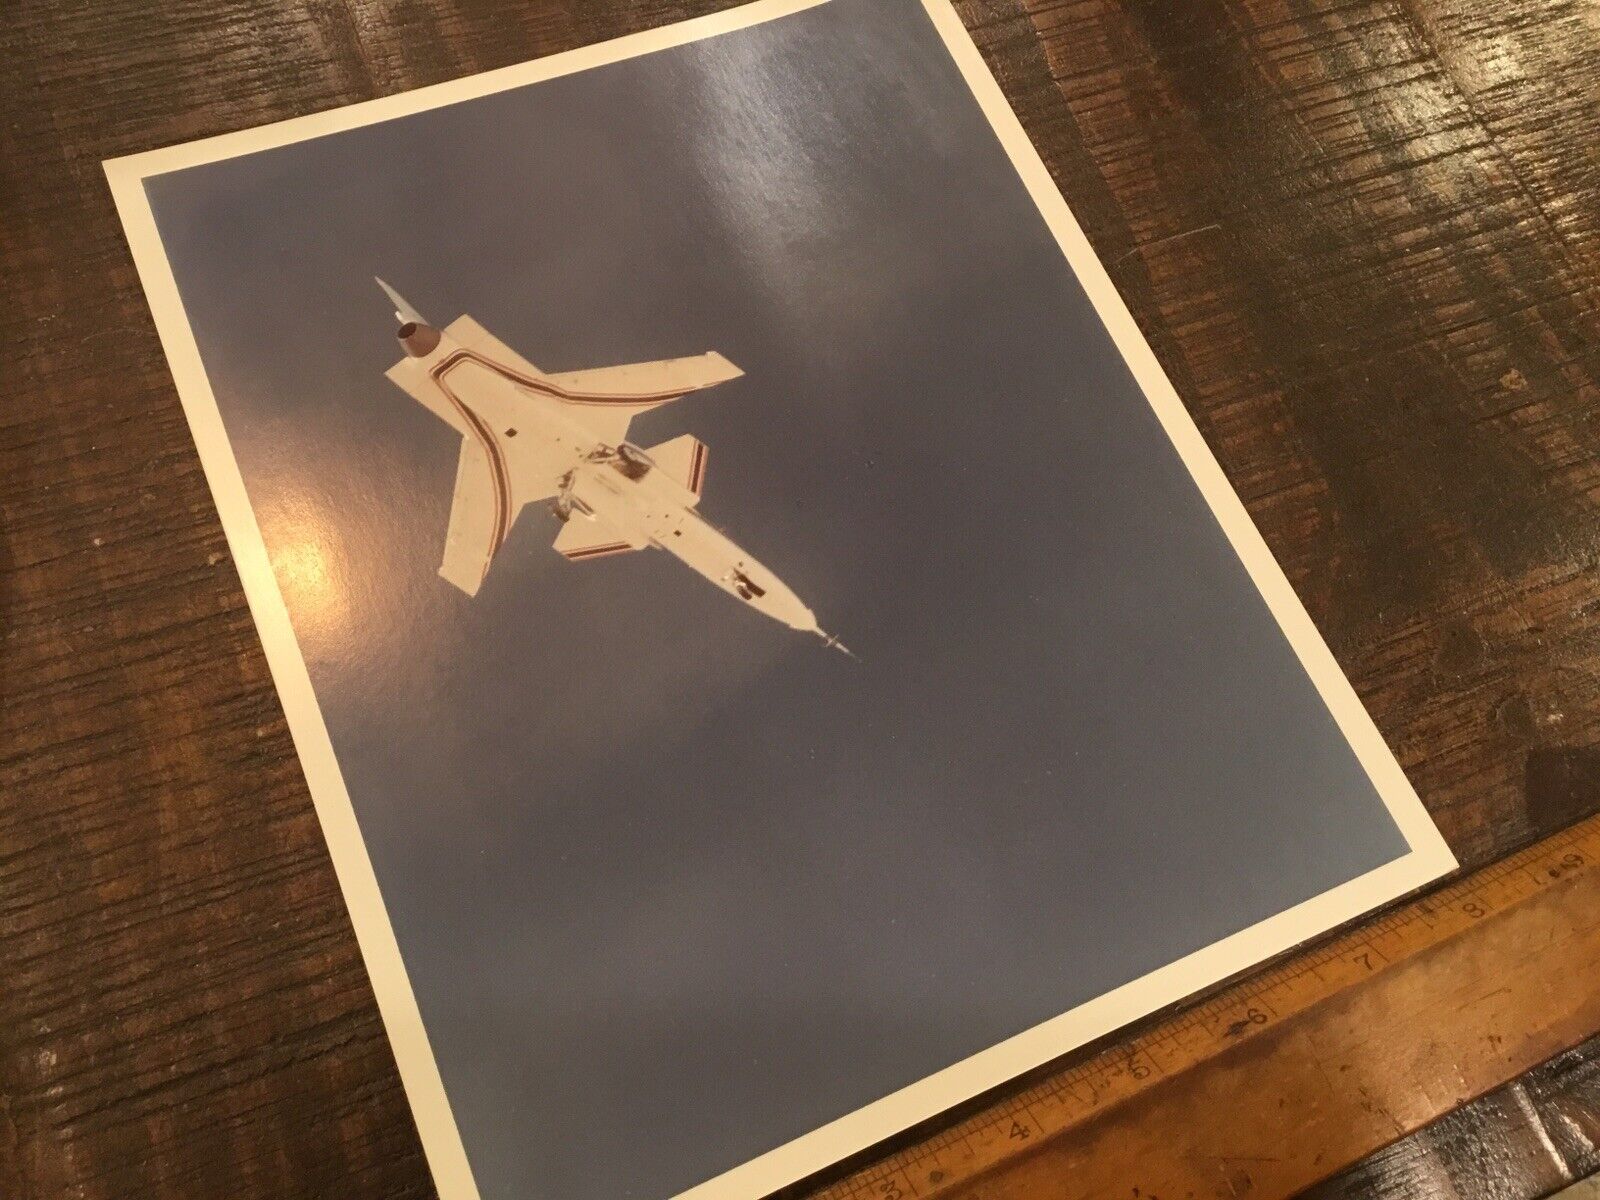 ORIGINAL VINTAGE GRUMMAN X-29 AIRCRAFT IN FLIGHT PHOTO